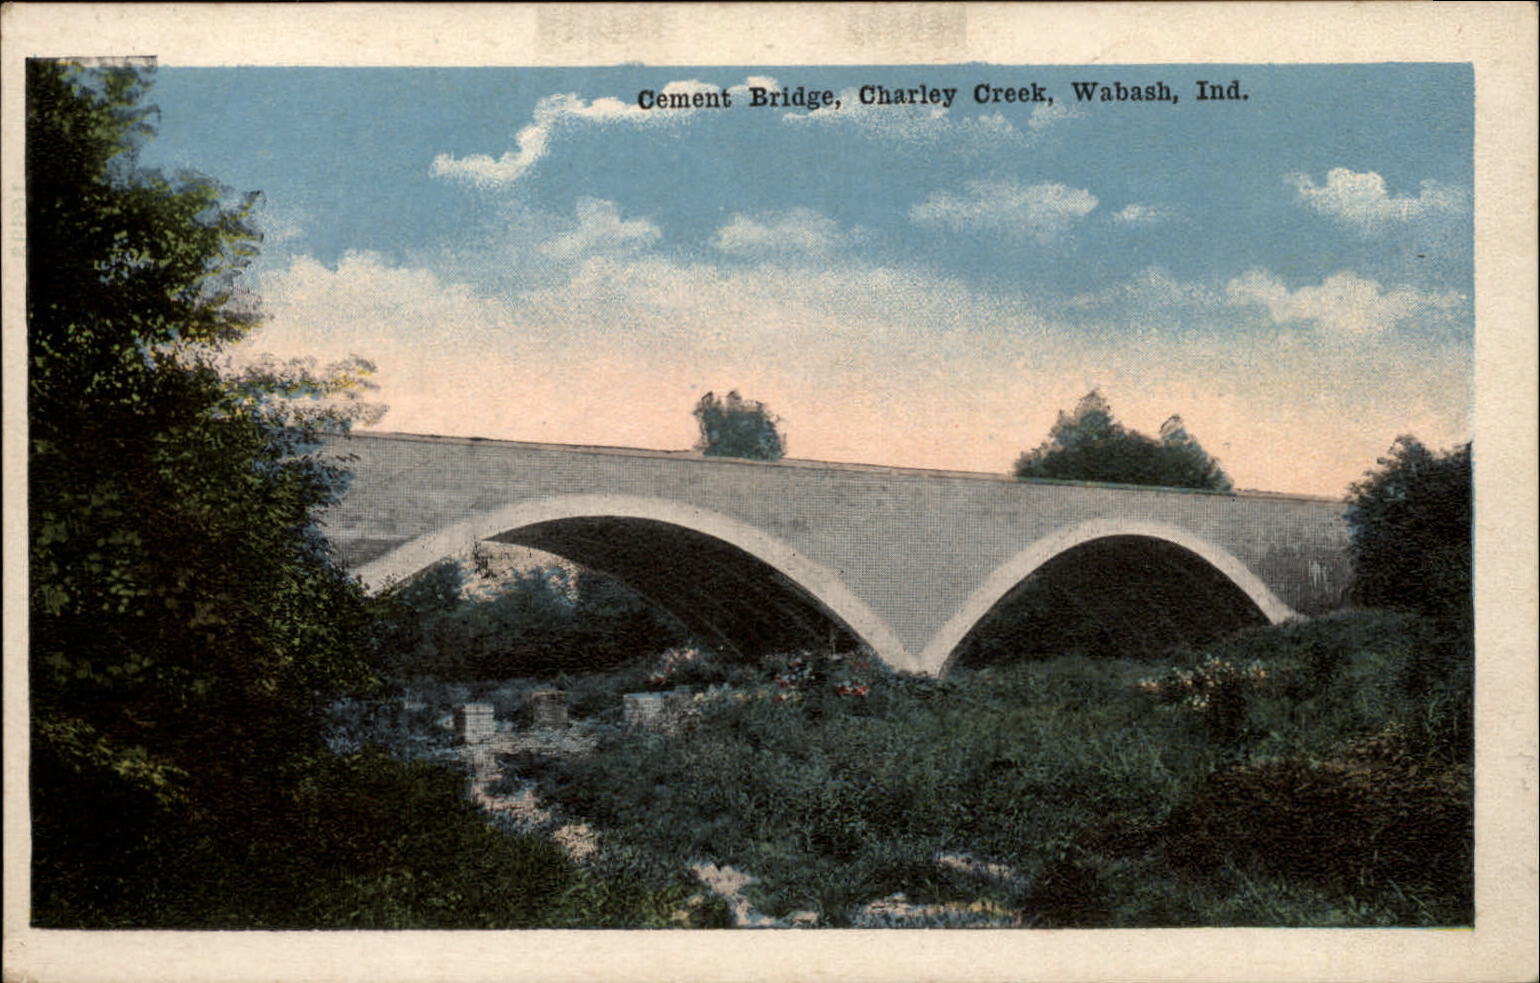 Cement Bridge Charley Creek Wabash Indiana ~ 1920s vintage postcard